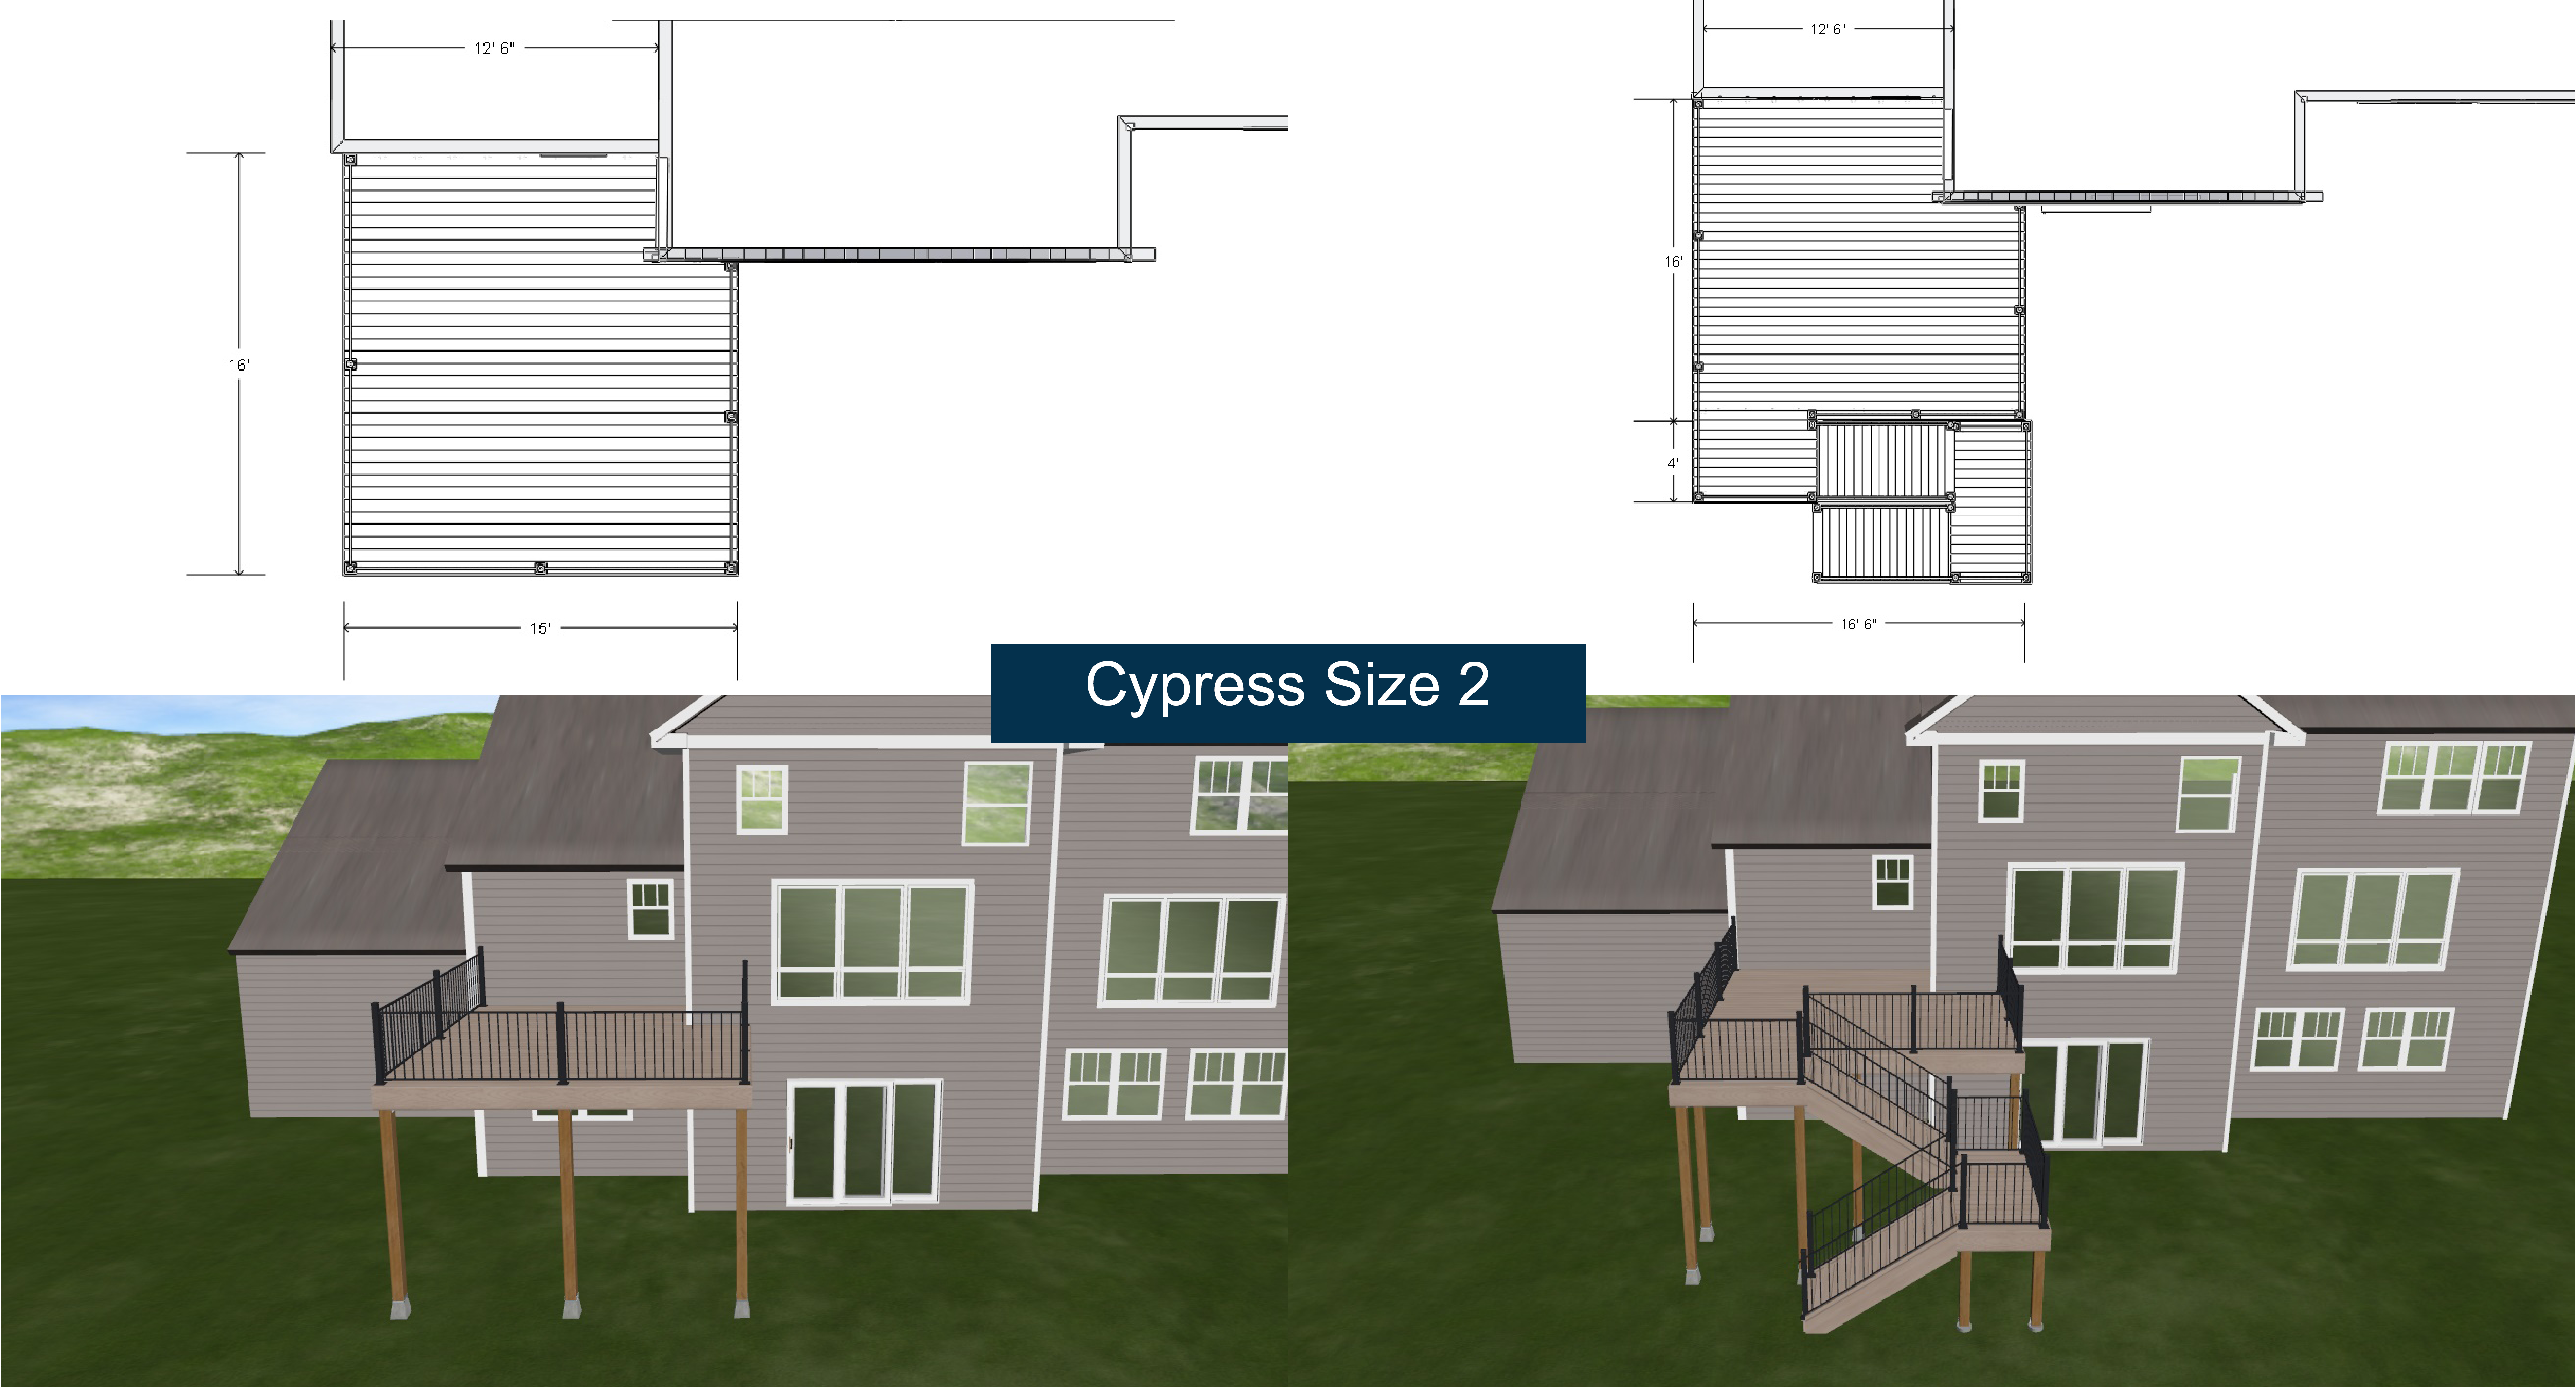 CWeb Cypress Size 2